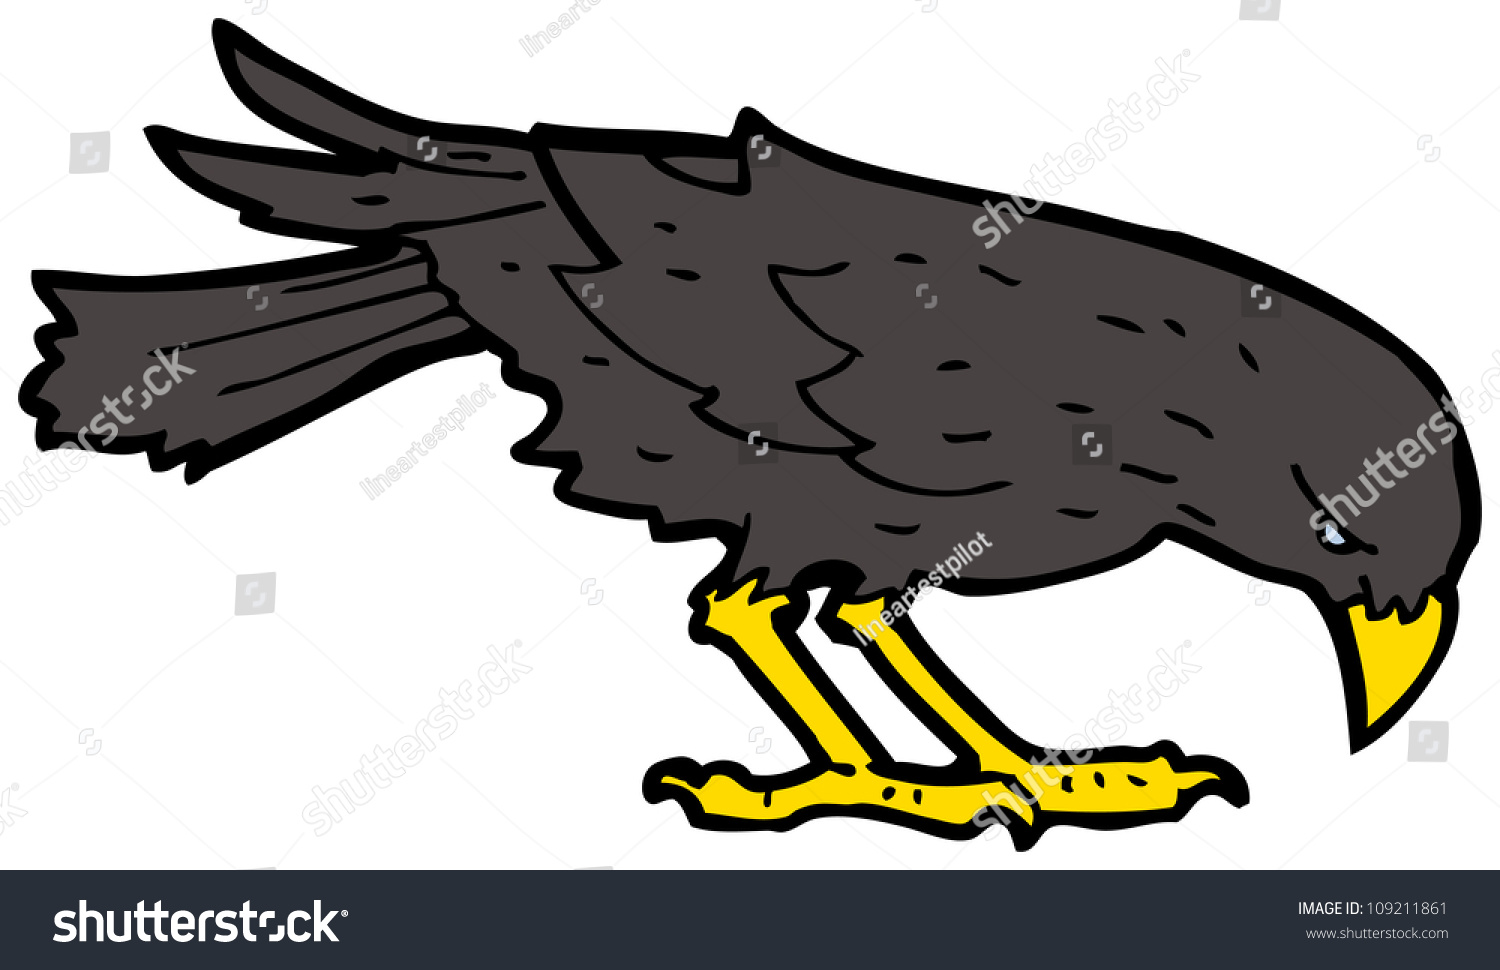 Cartoon Crow Stock Photo 109211861 : Shutterstock